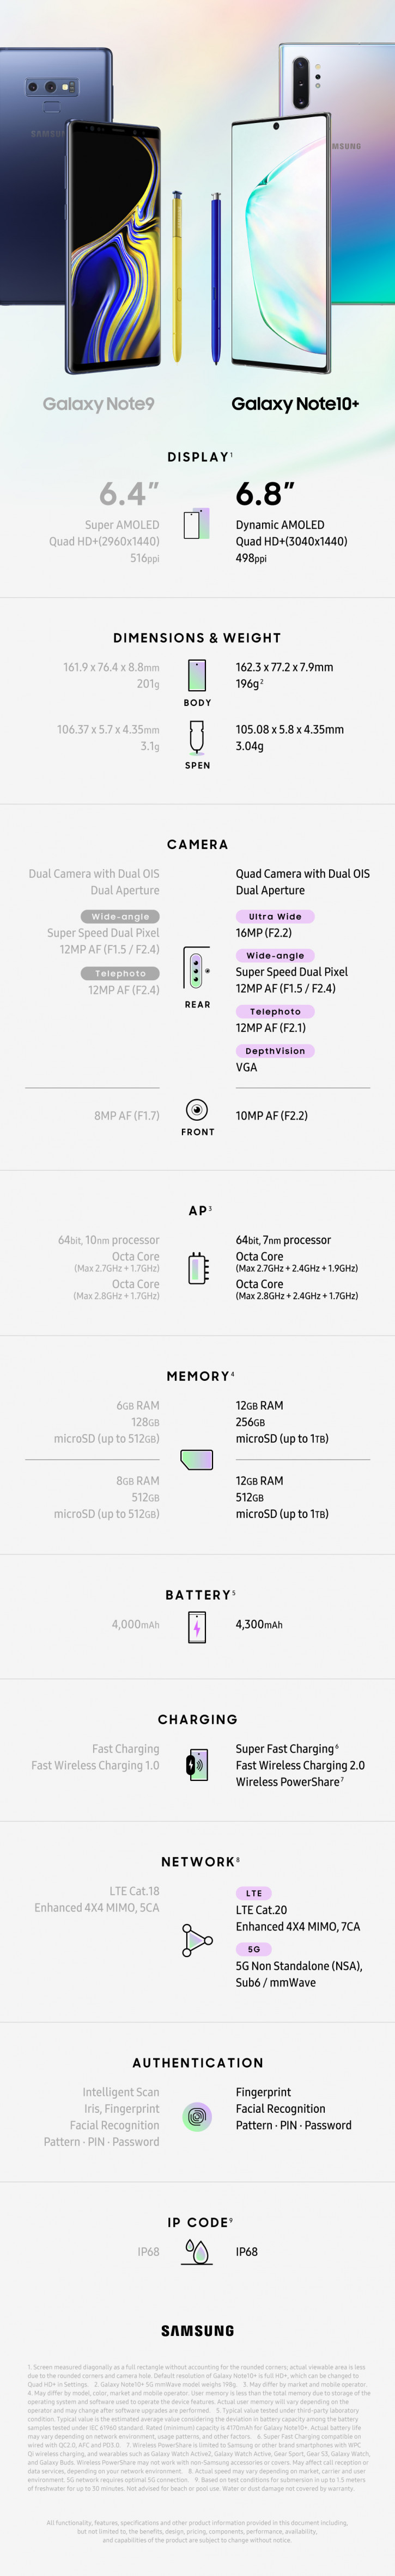 Samsung Galaxy Note 10+ против Galaxy Note 9: инфографика